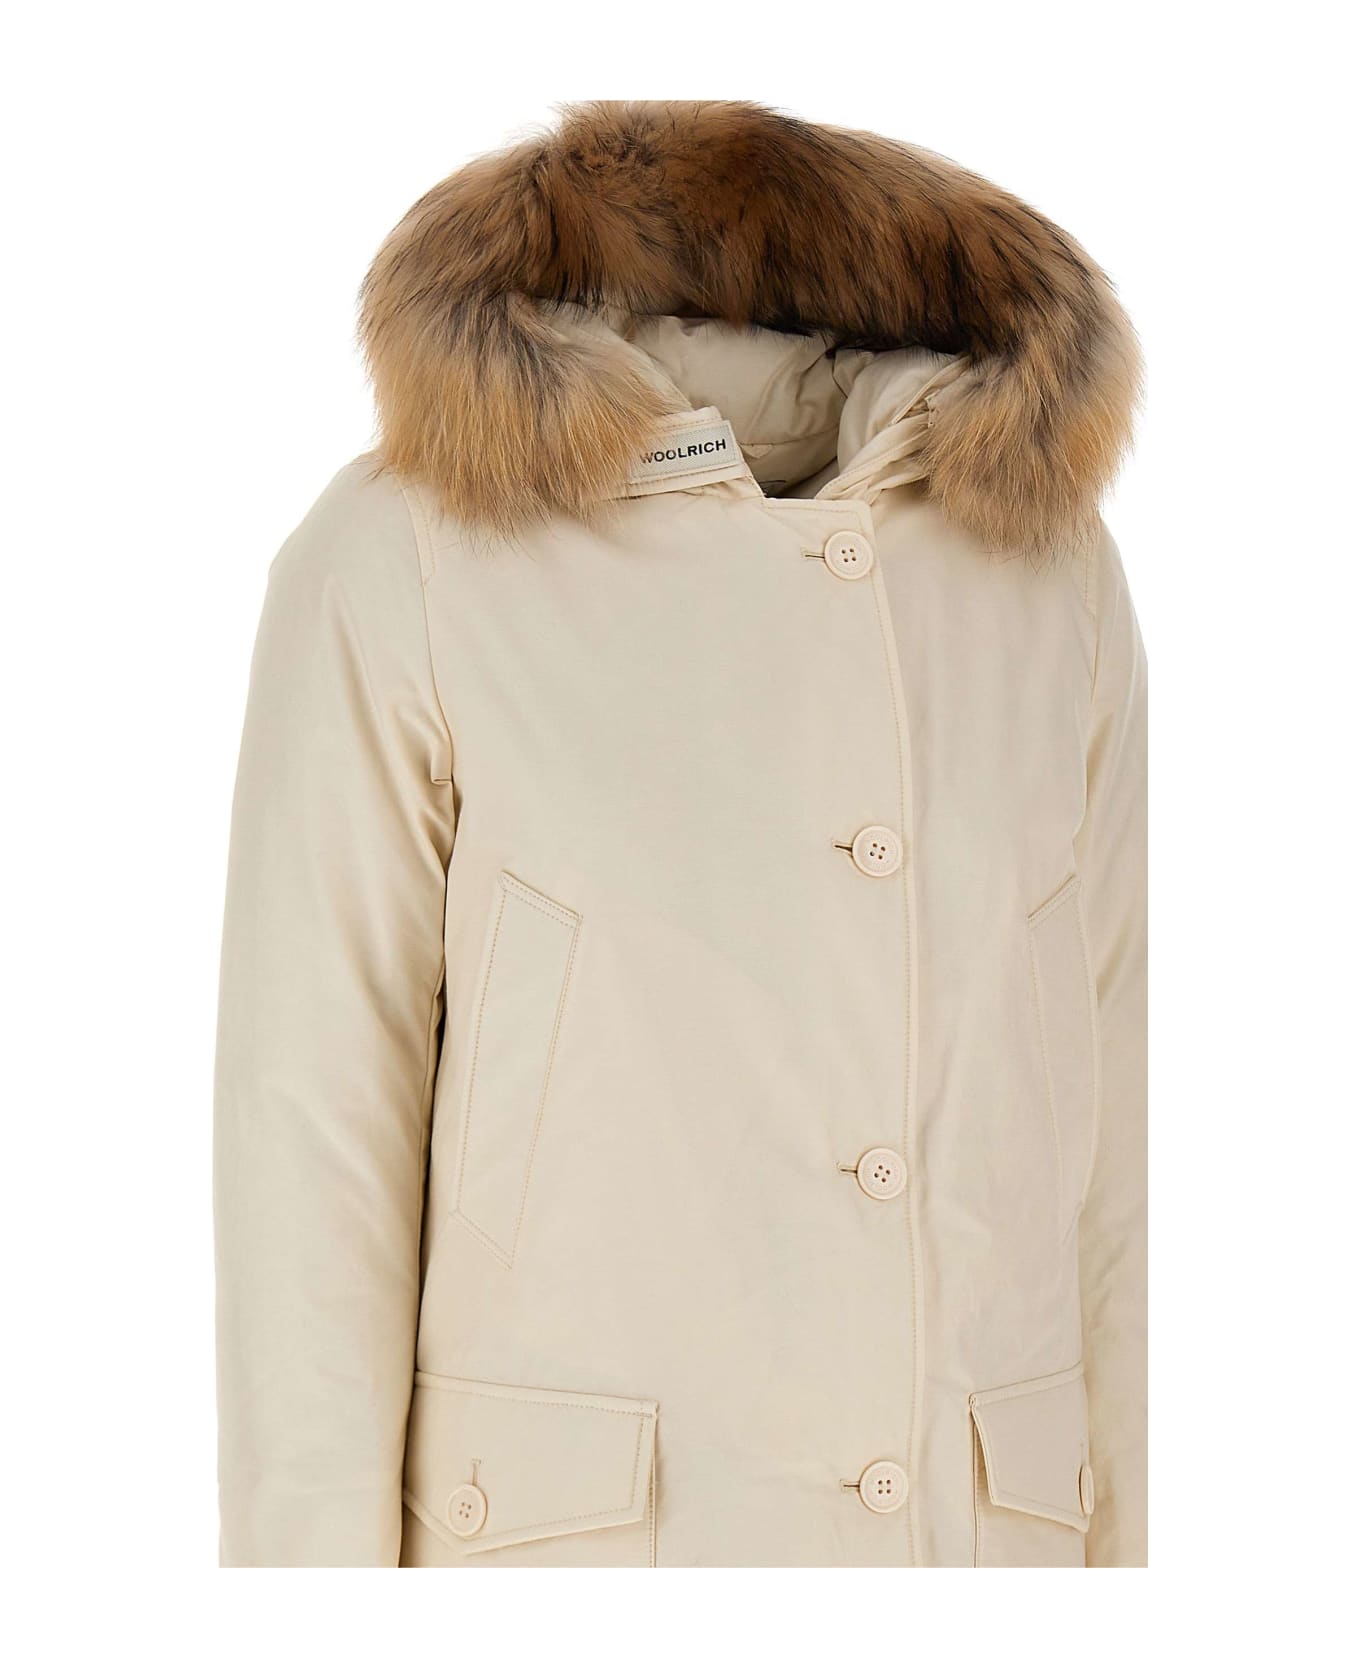 Woolrich 'arctic Detachable Fur Parka' - Mkc Milky Cream コート